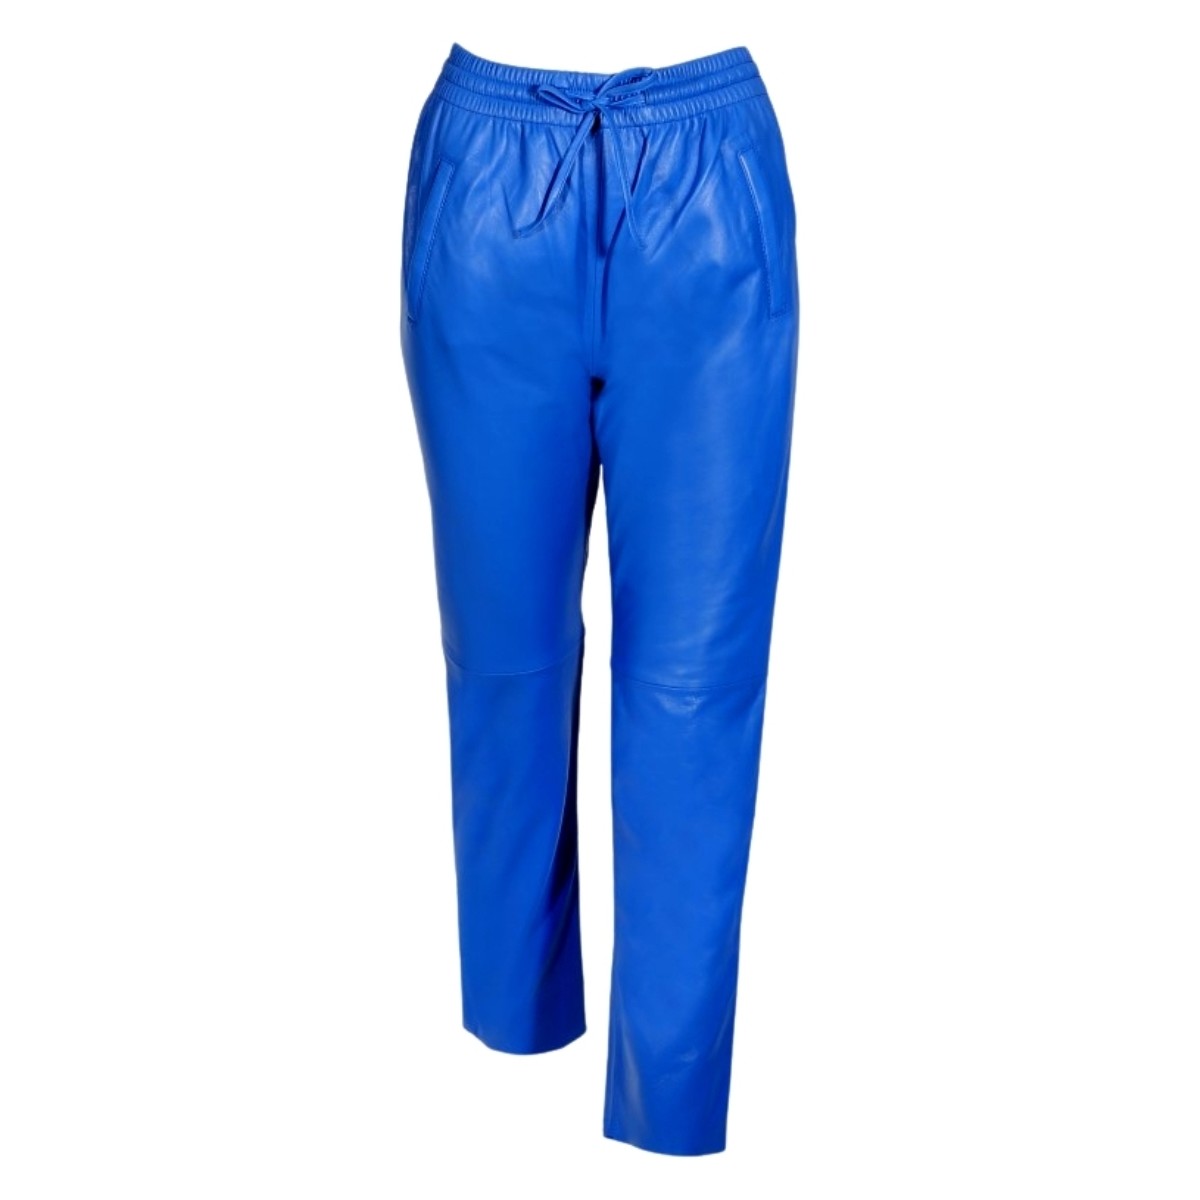 Oakwood Bleu Pantalon jogpant en cuir Gift Ref 50426 Bl